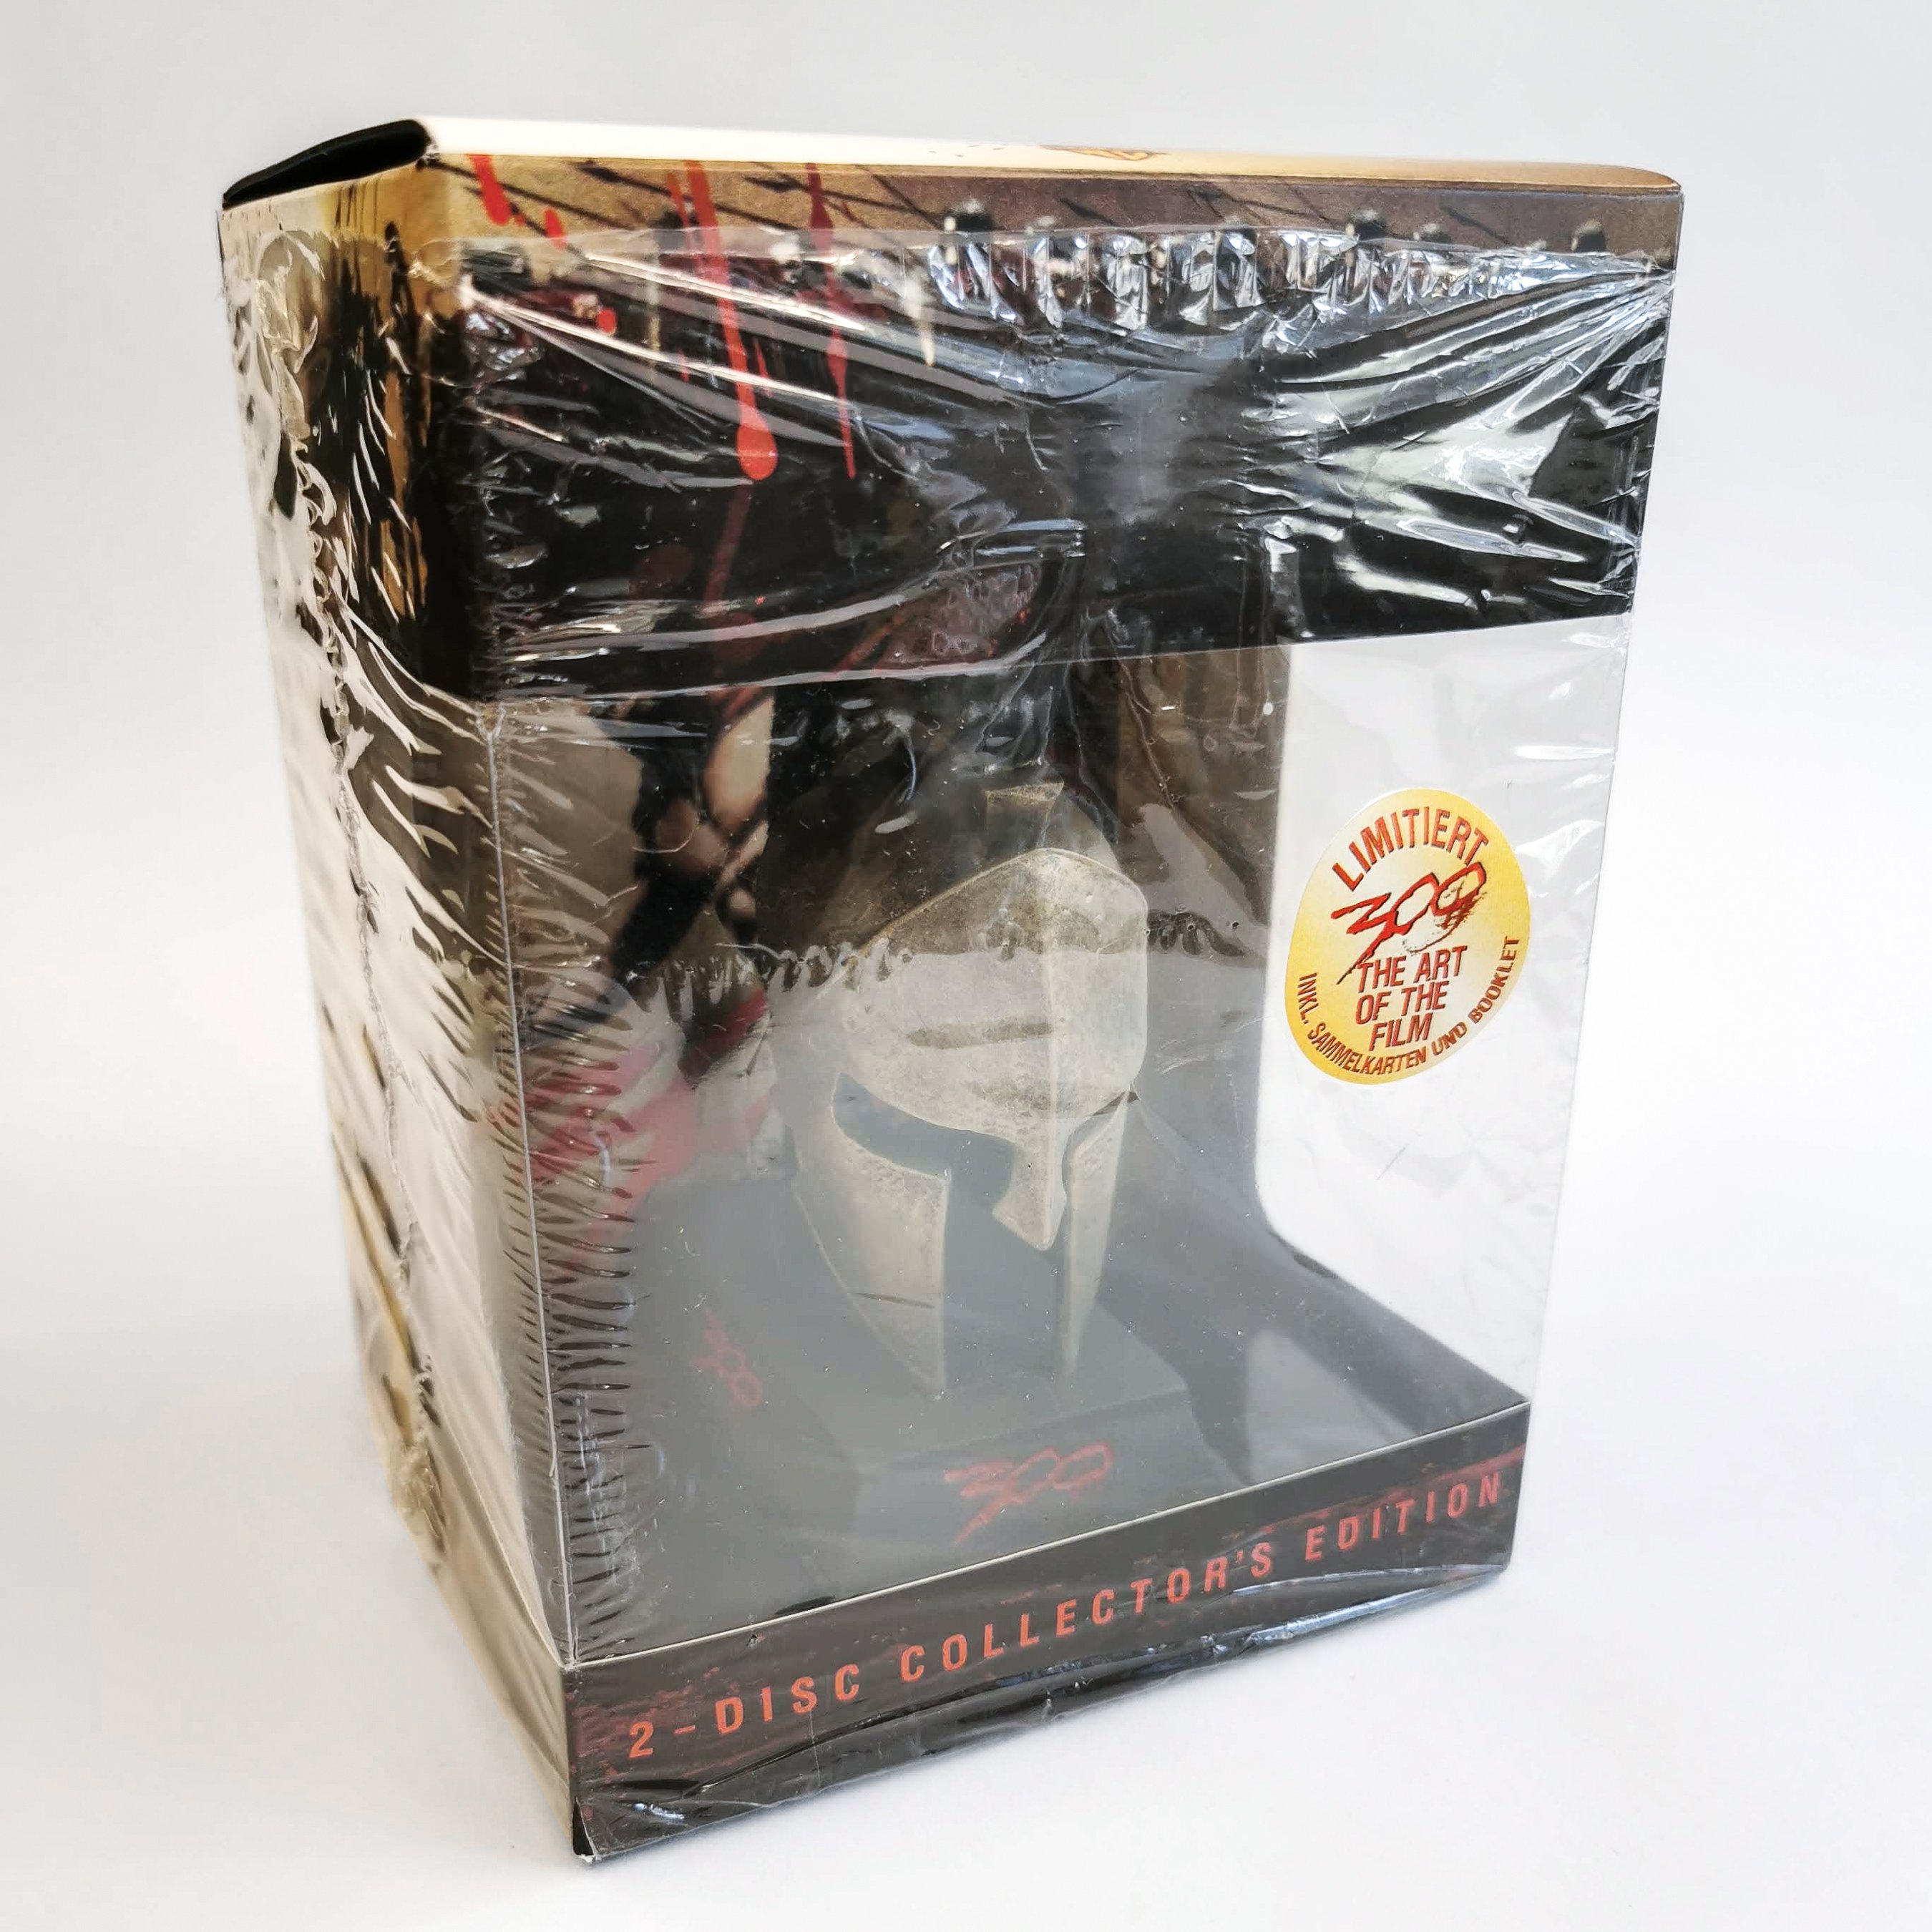 300 (2-DVD Collectors Edition)